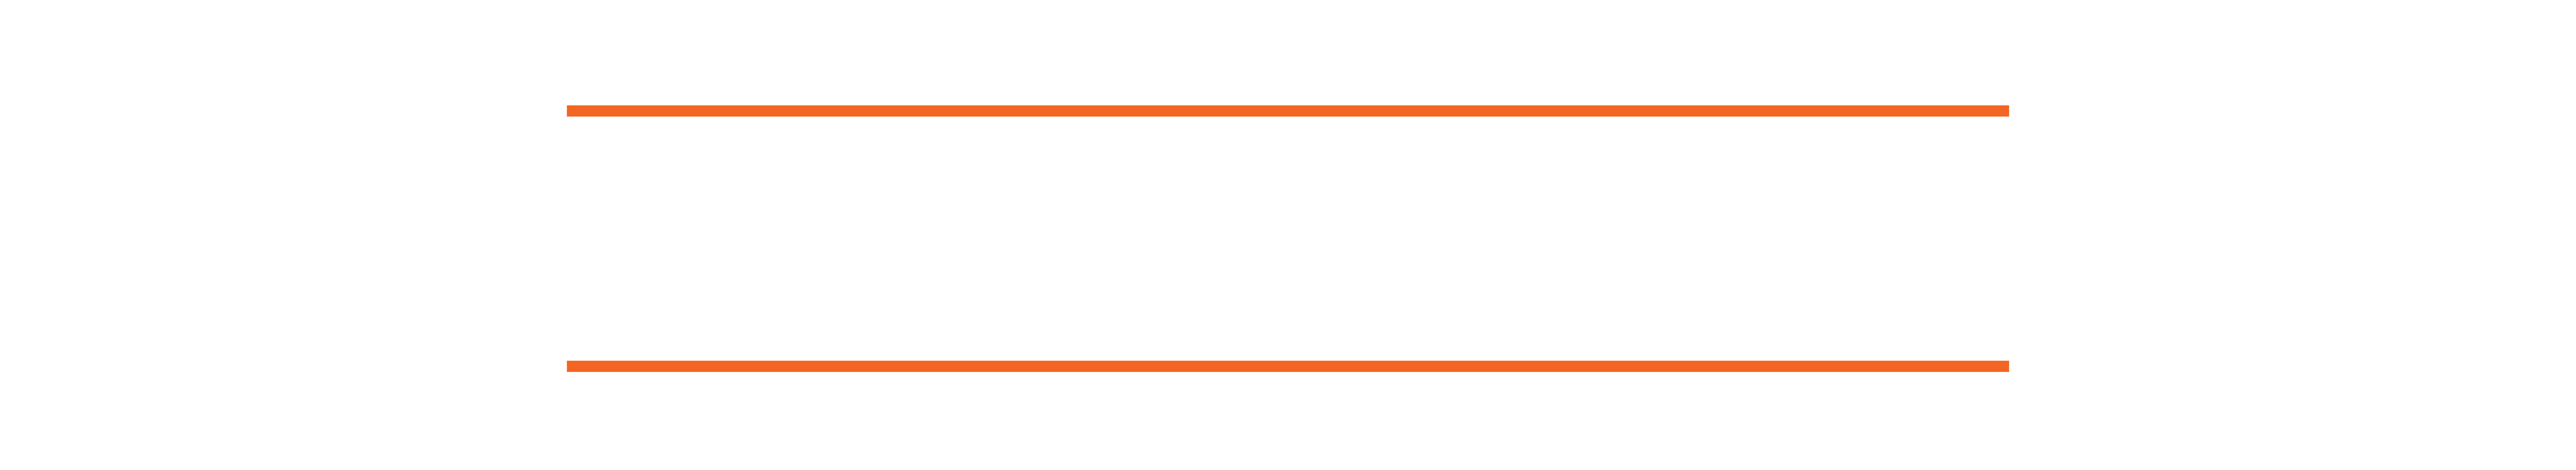 Barnes Harley-Davidson®